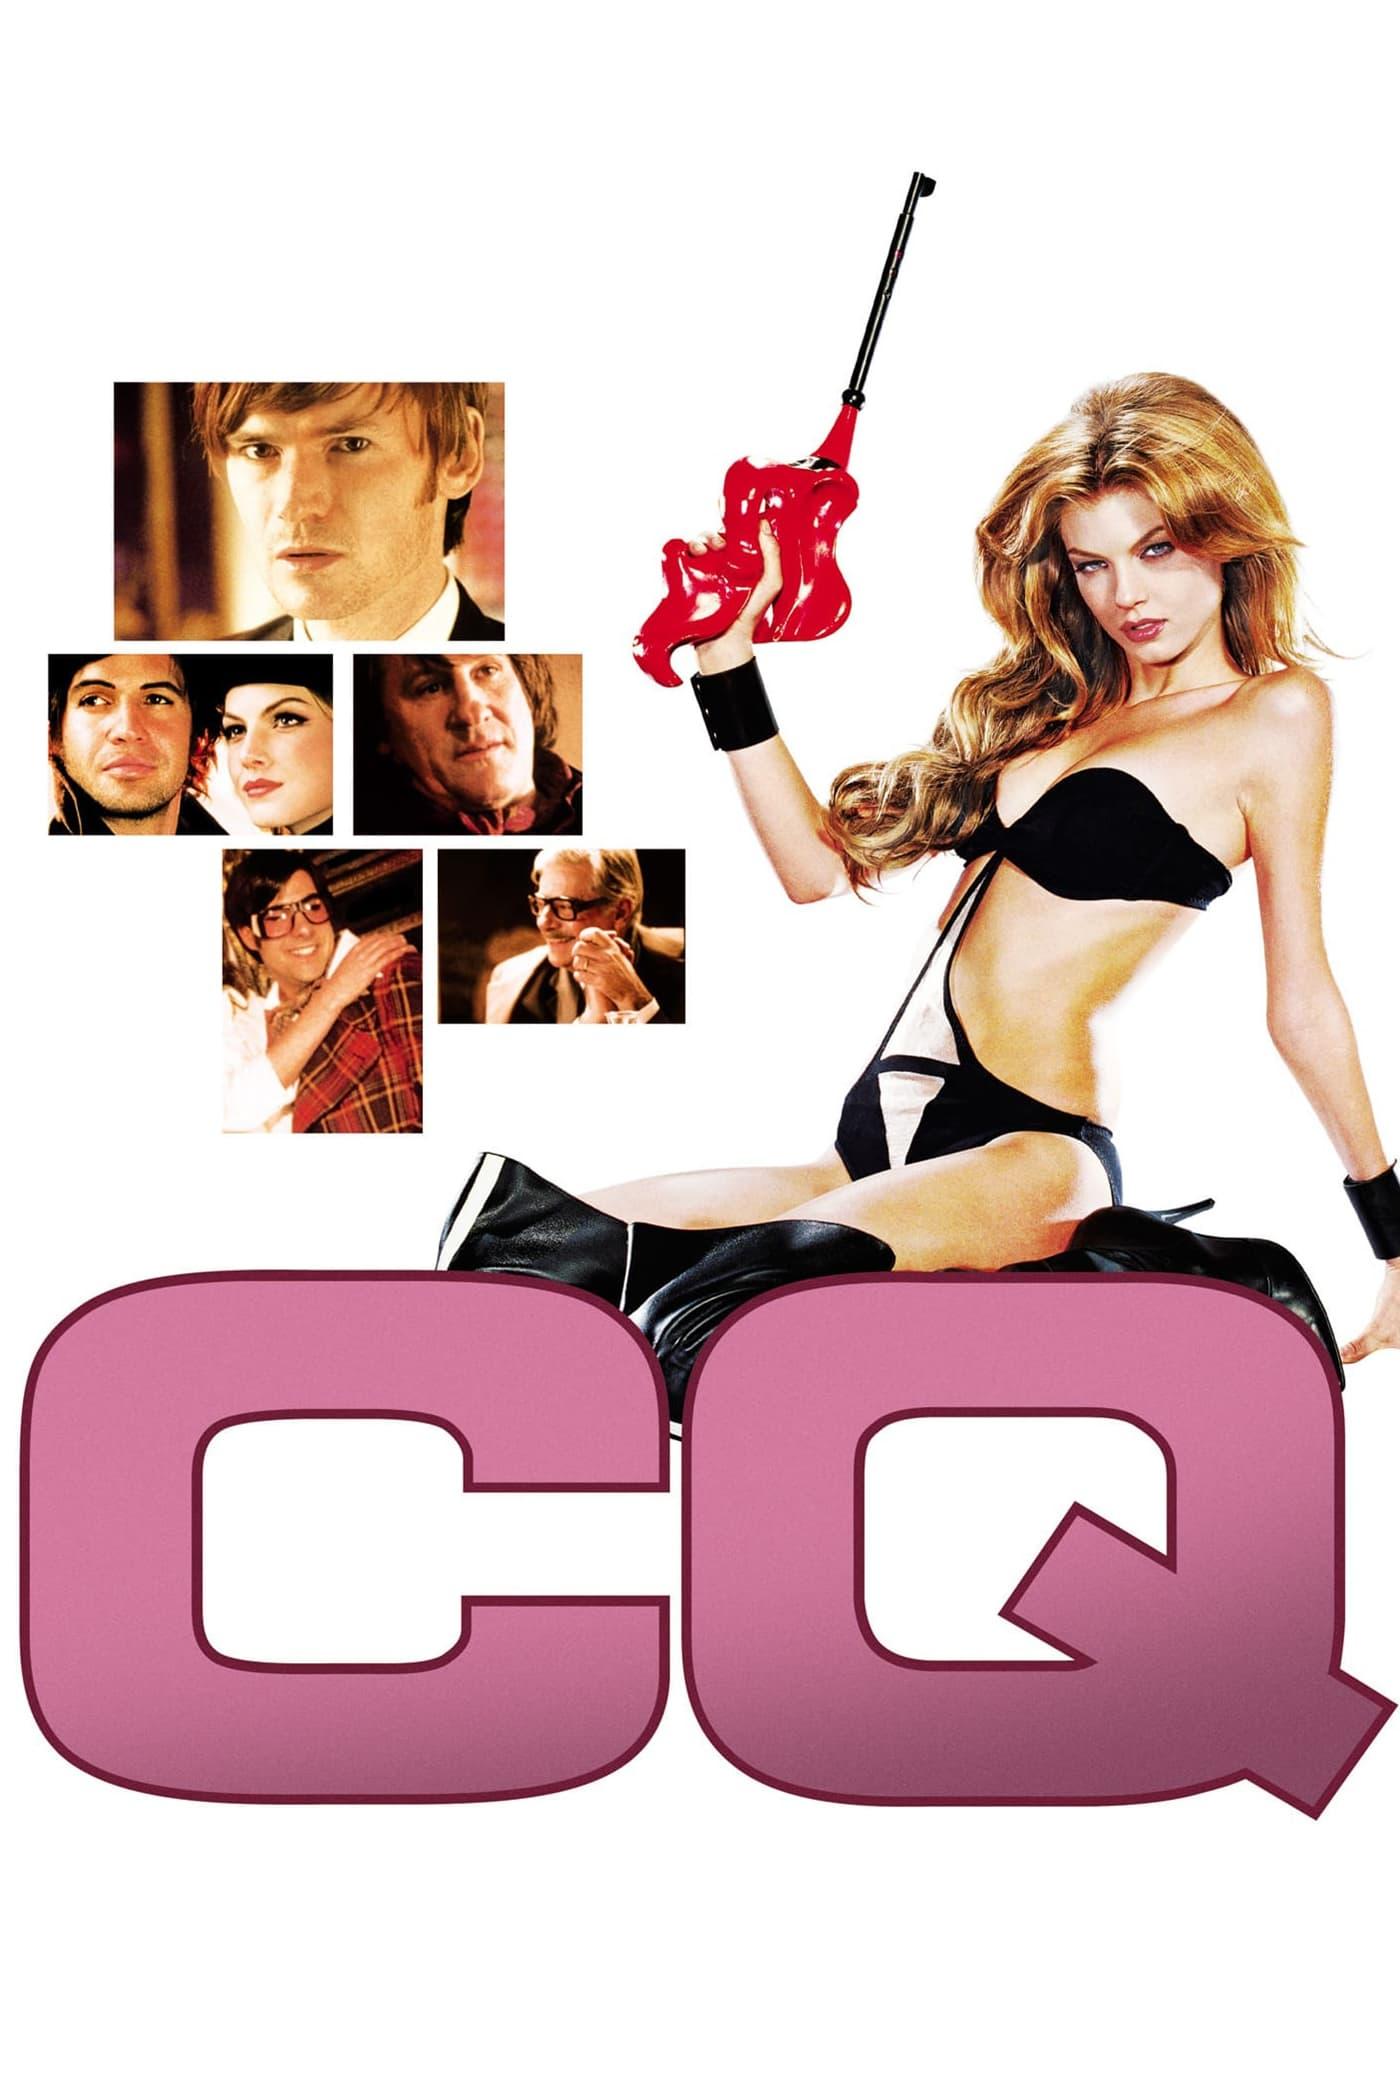 CQ poster